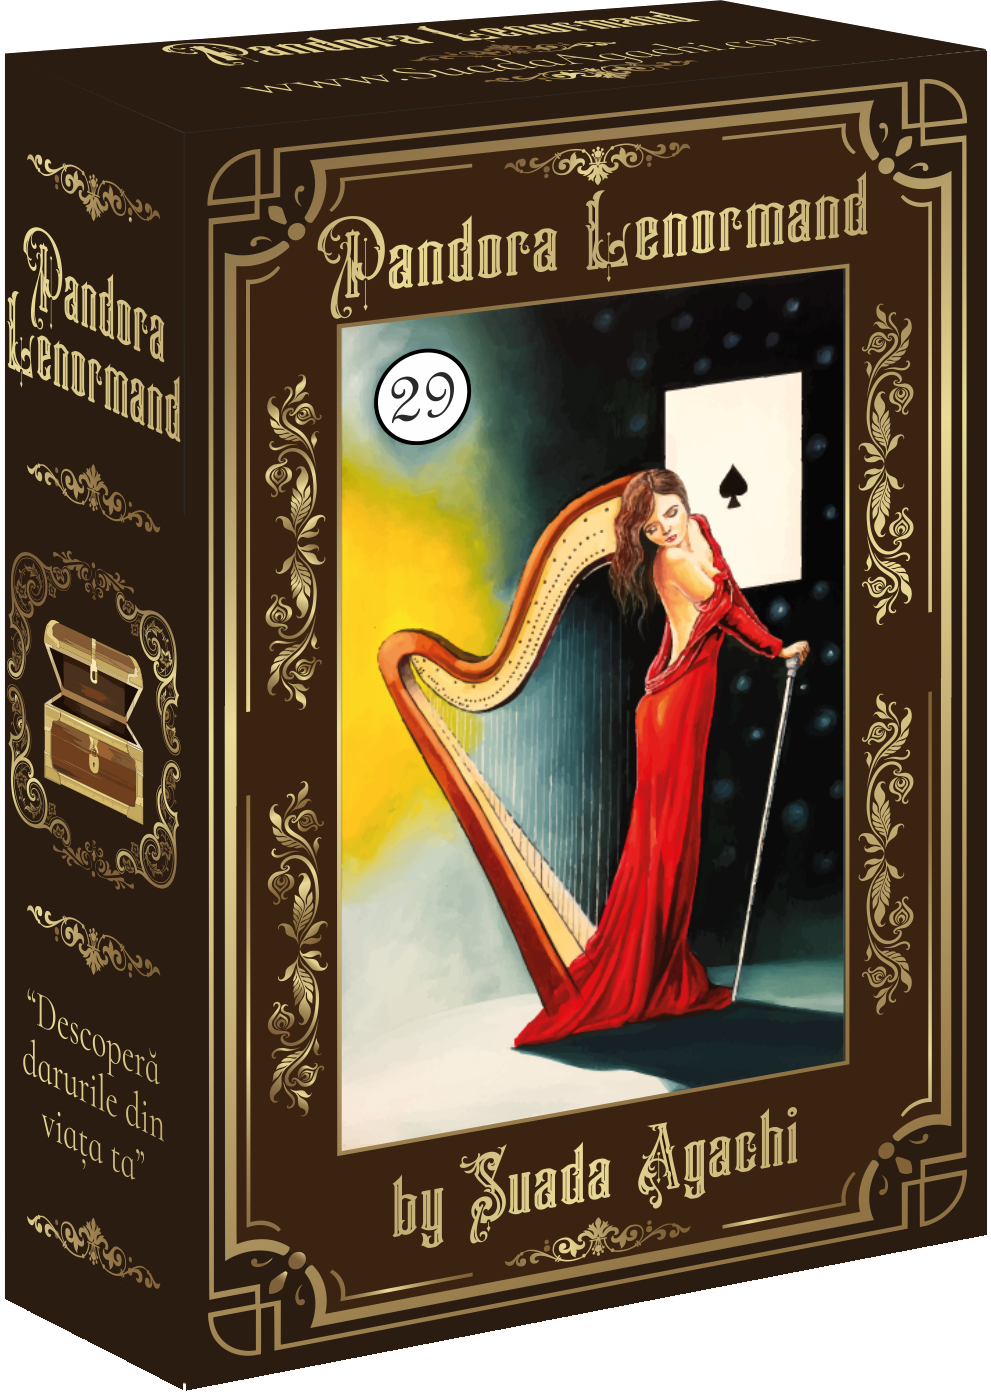 Pandora Lenormand